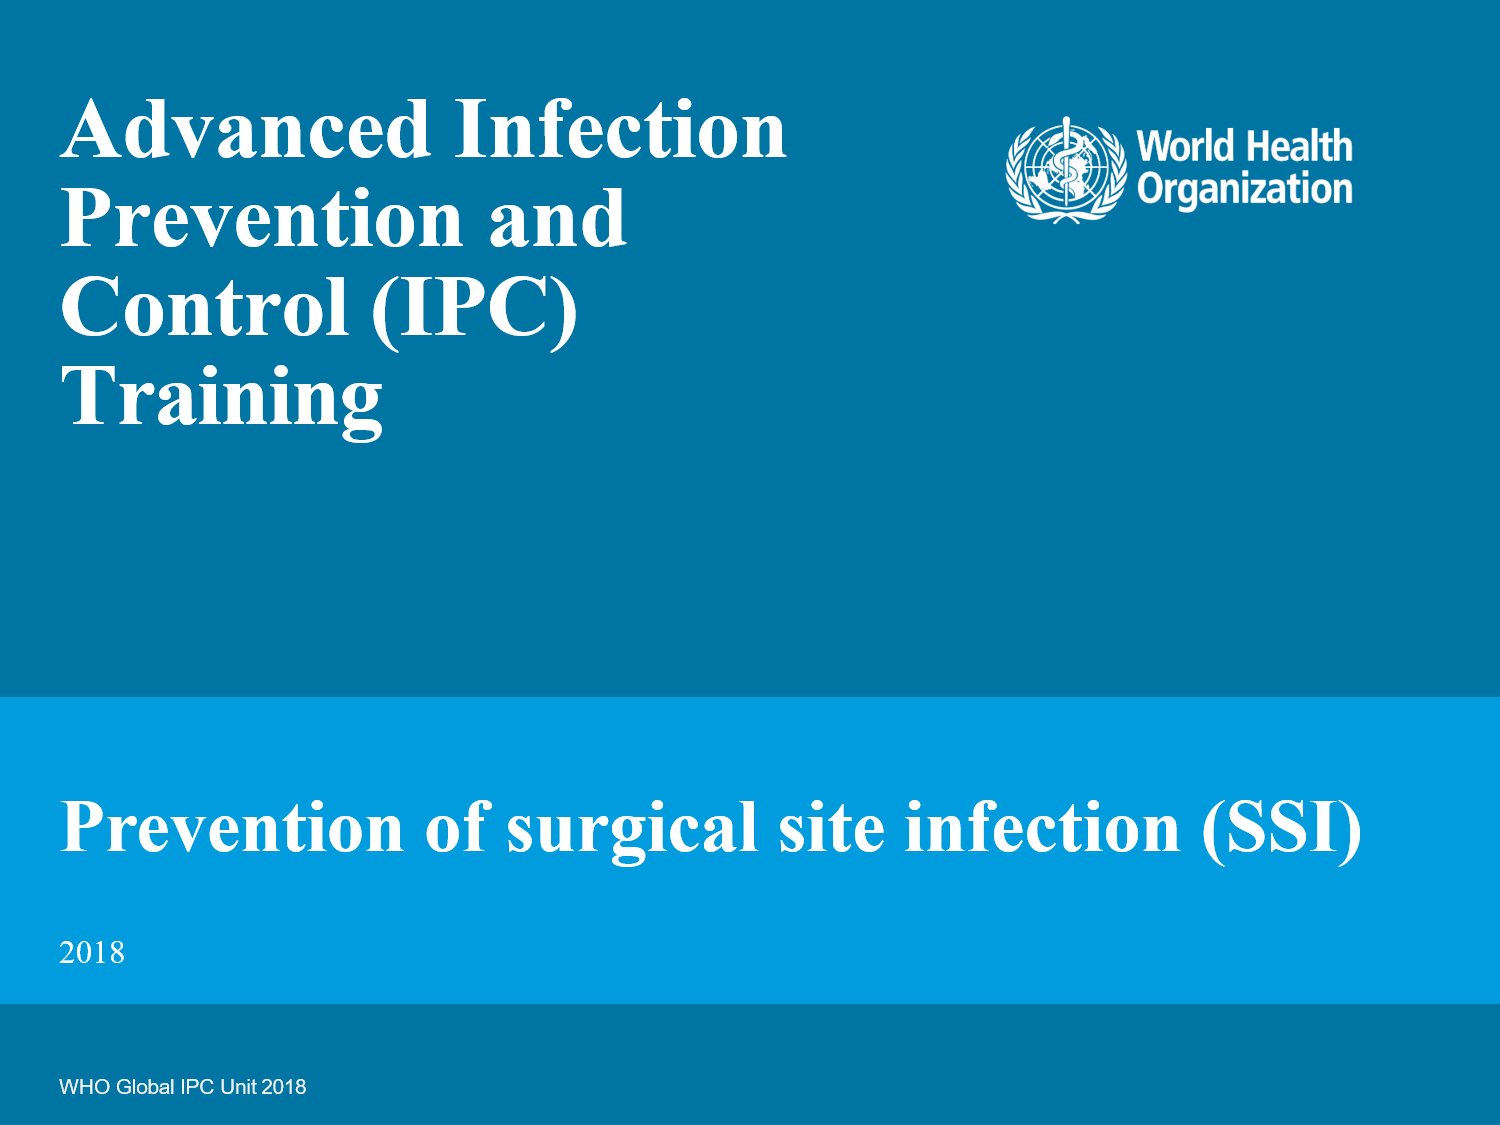 Prevention of SSI slide